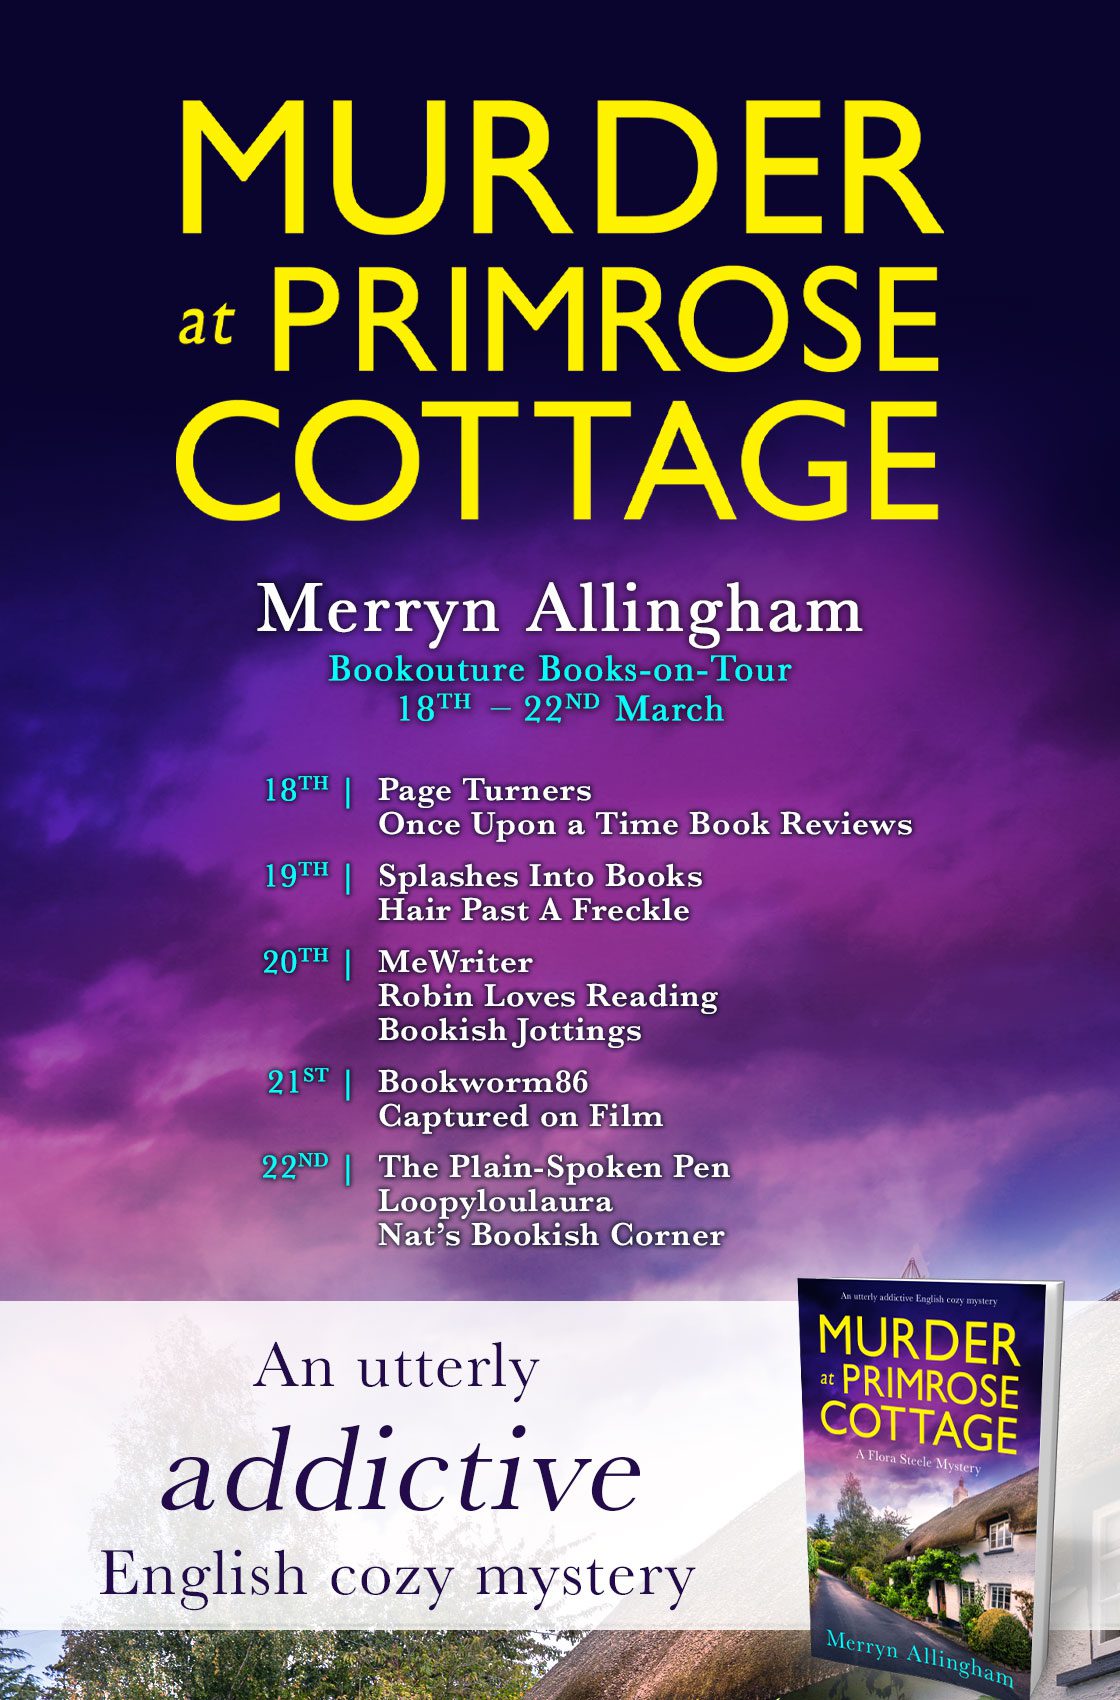 Murder at Primrose Cottage blog tour banner